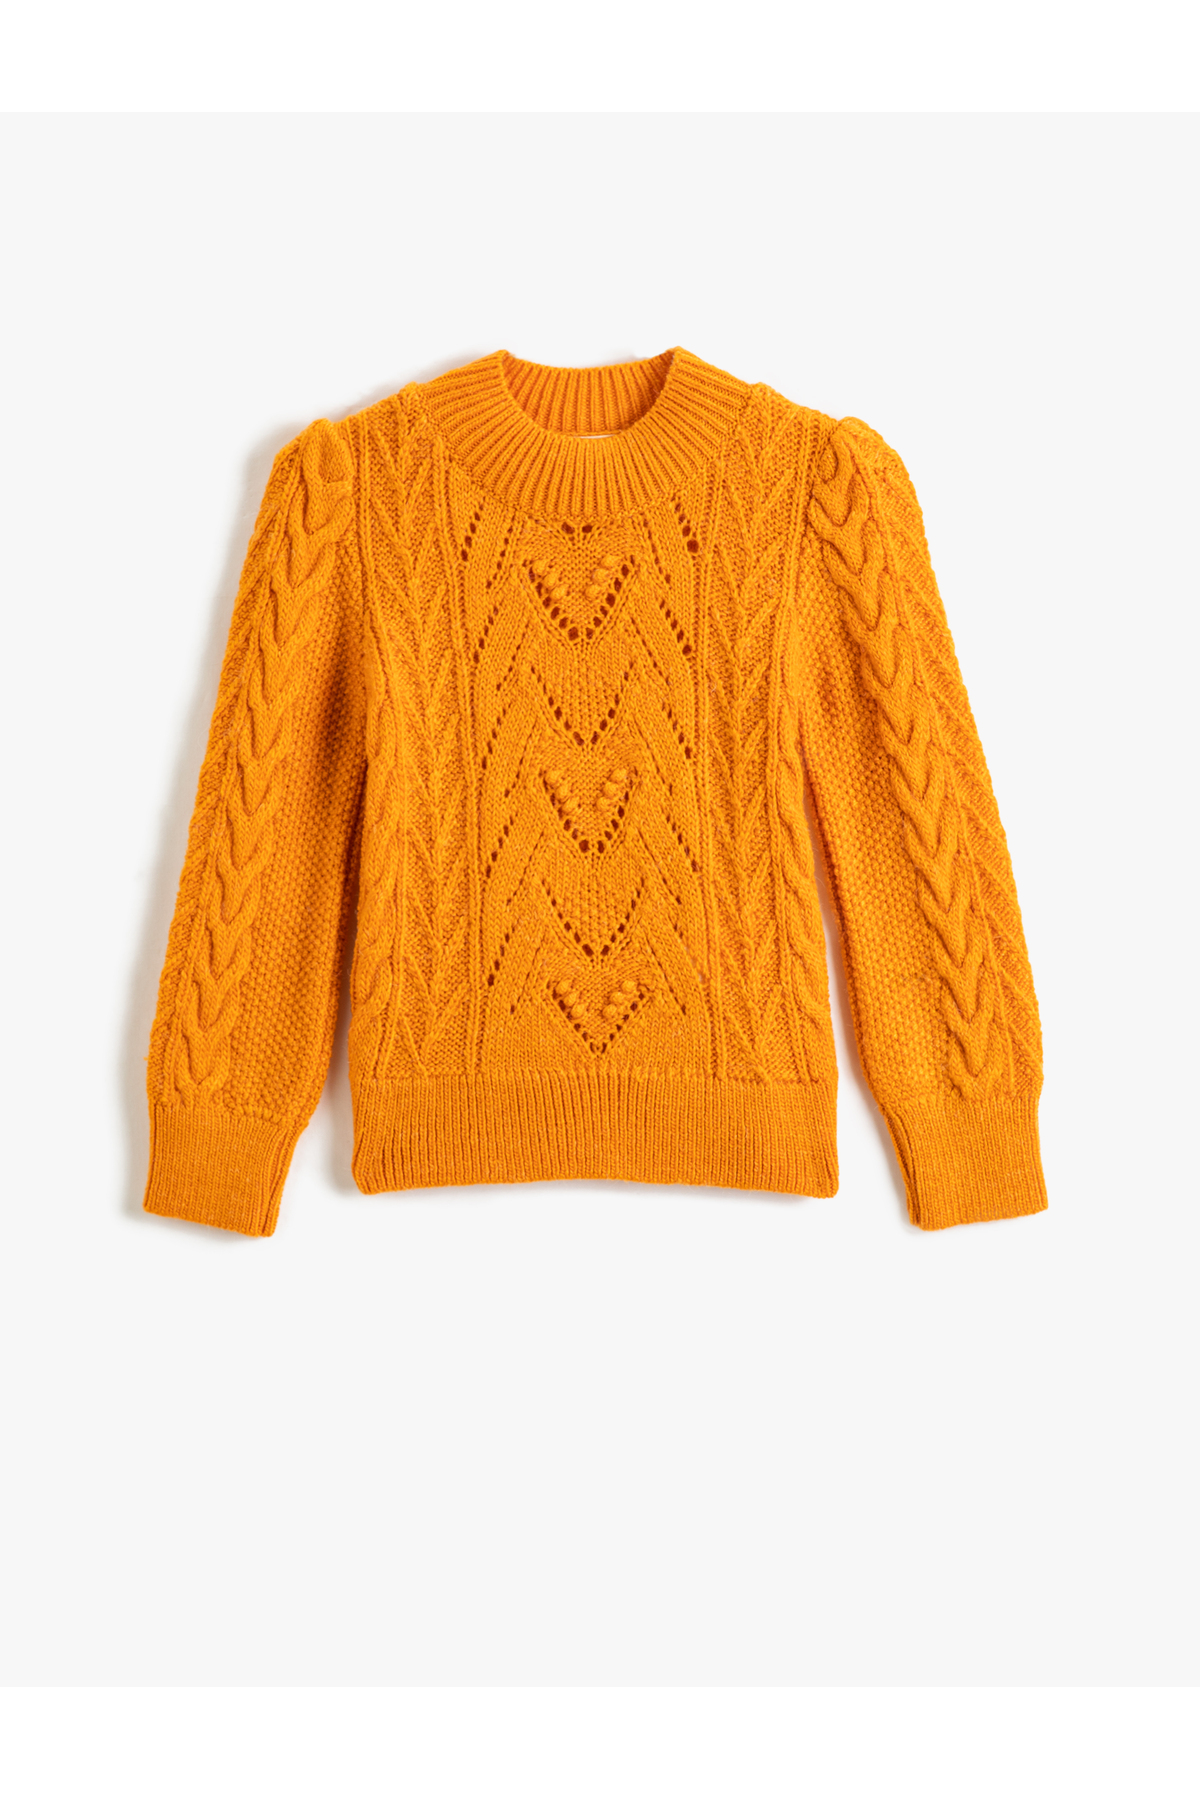 Koton Hair Knit Sweater Long Sleeve High Collar